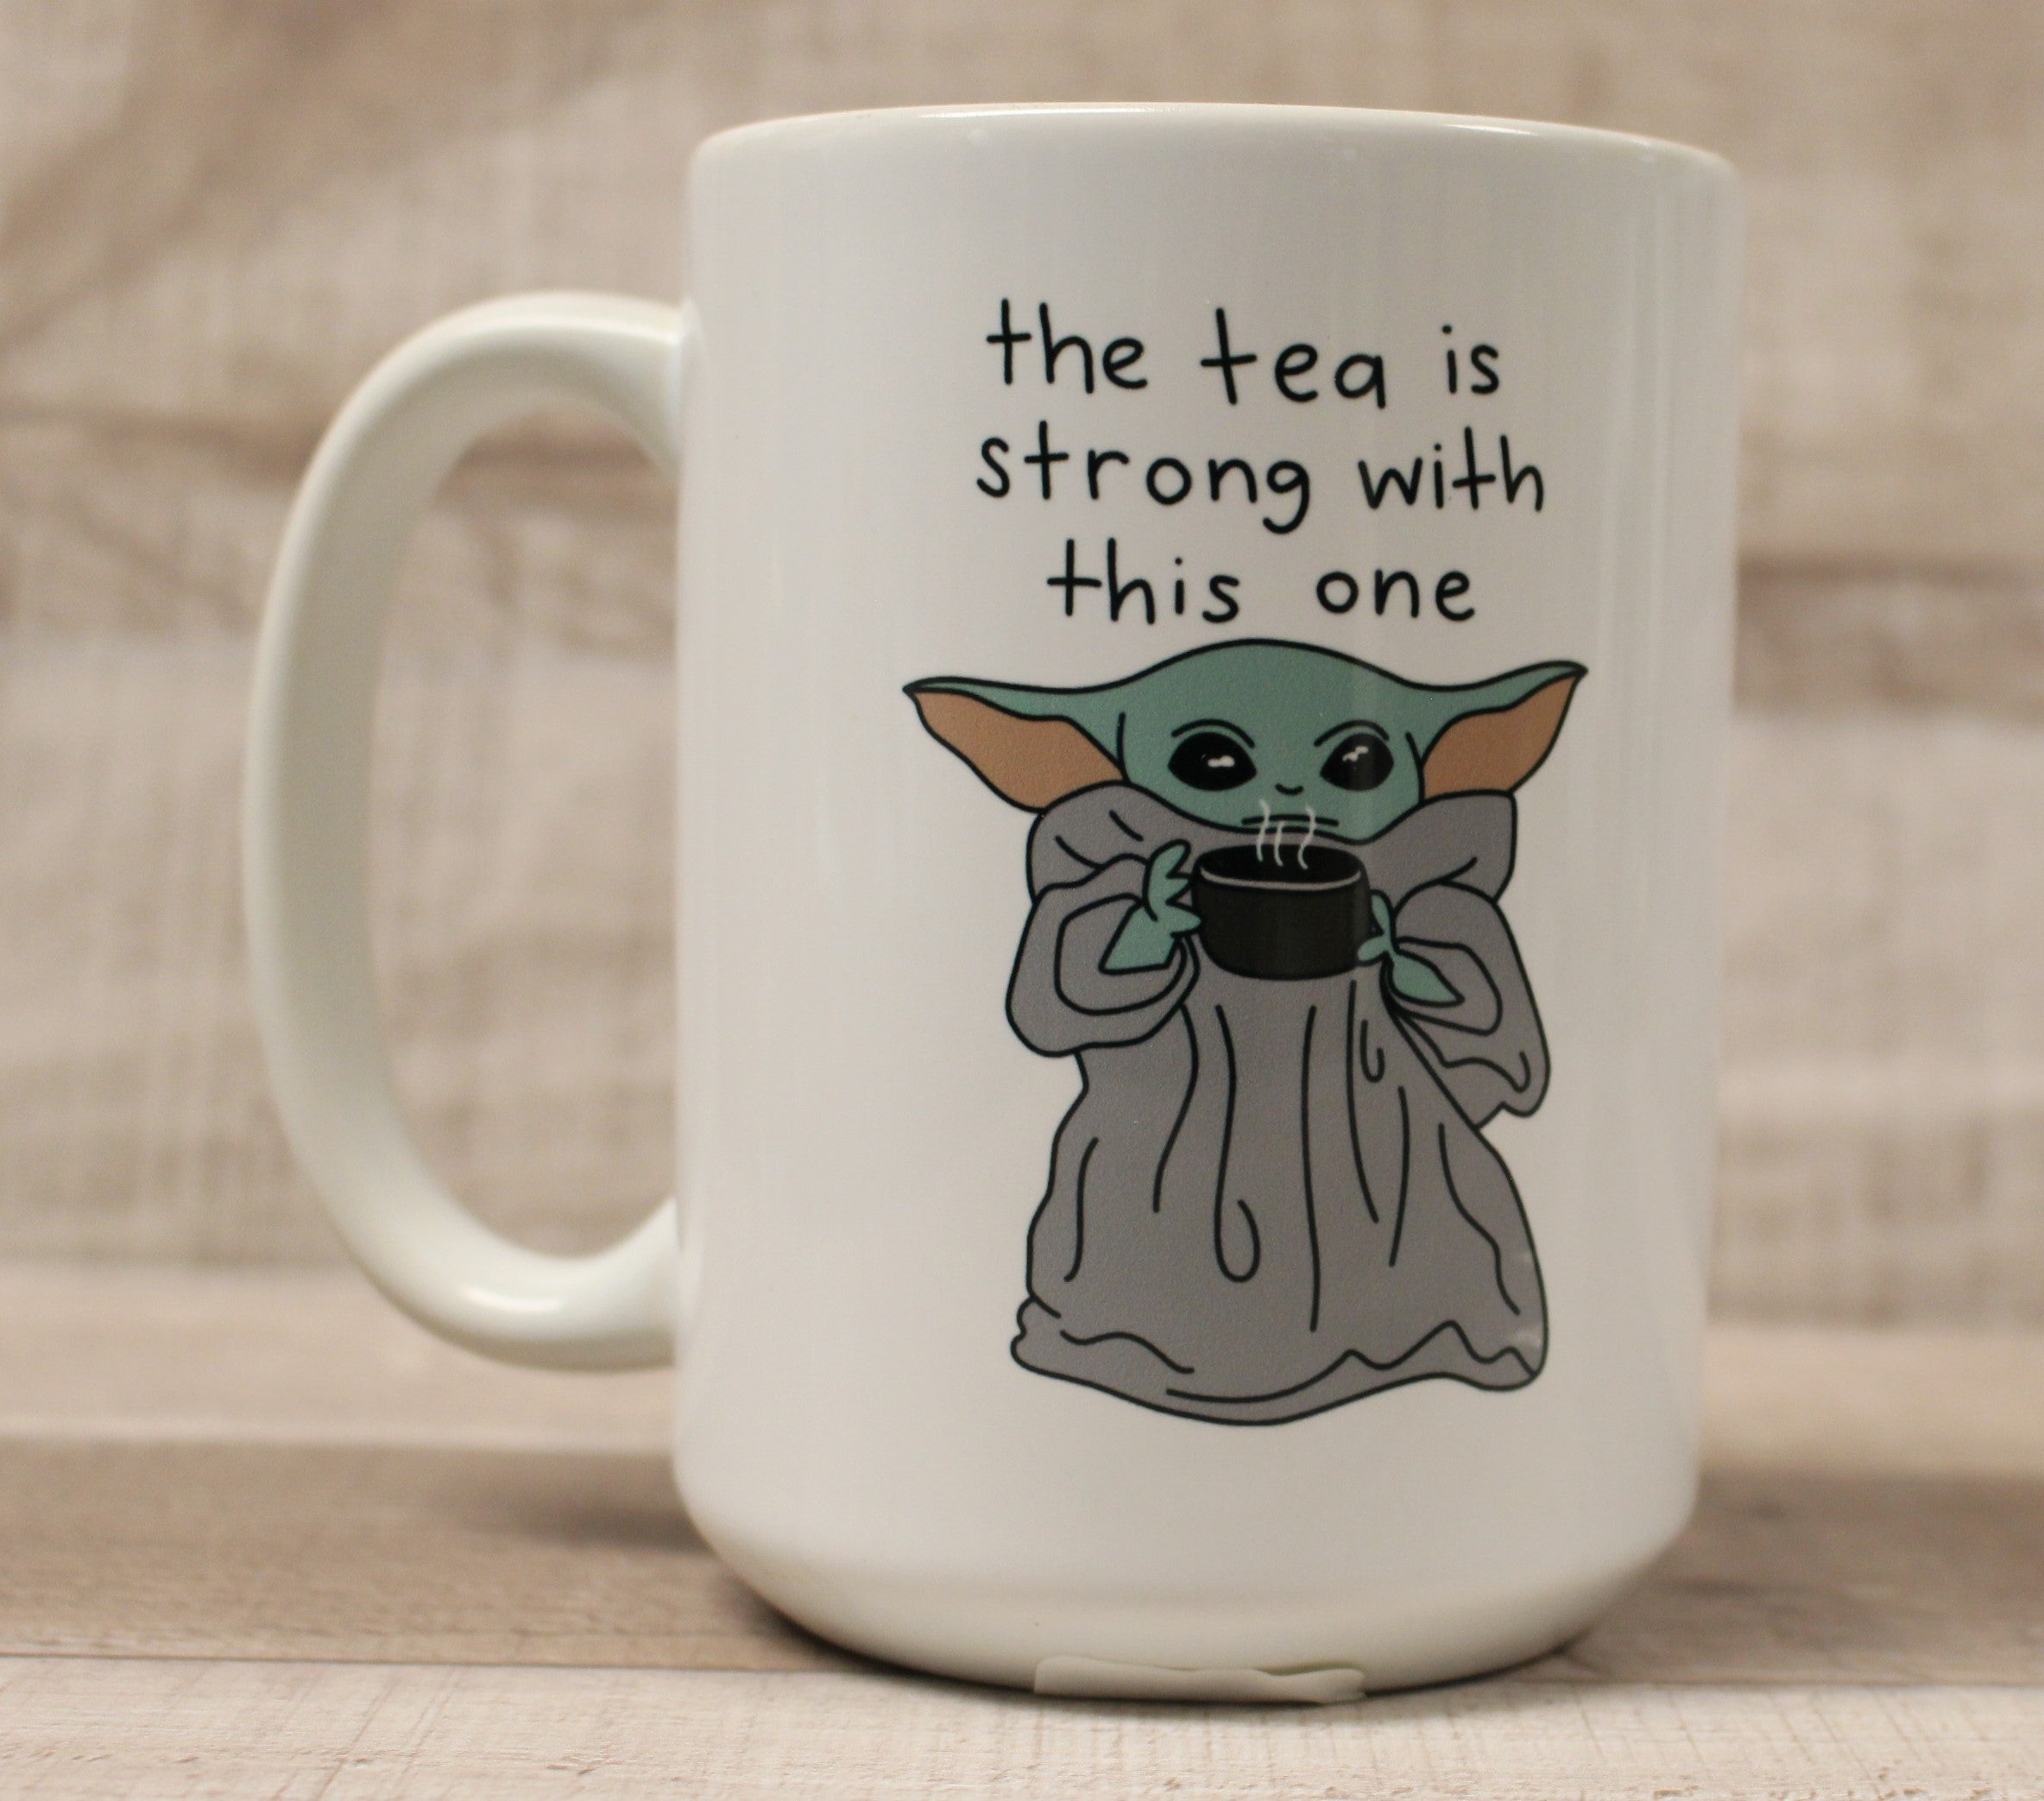 Star Wars The Mandalorian The Child Grogu Jedi Baby Yoda Coffee Cup / Mug